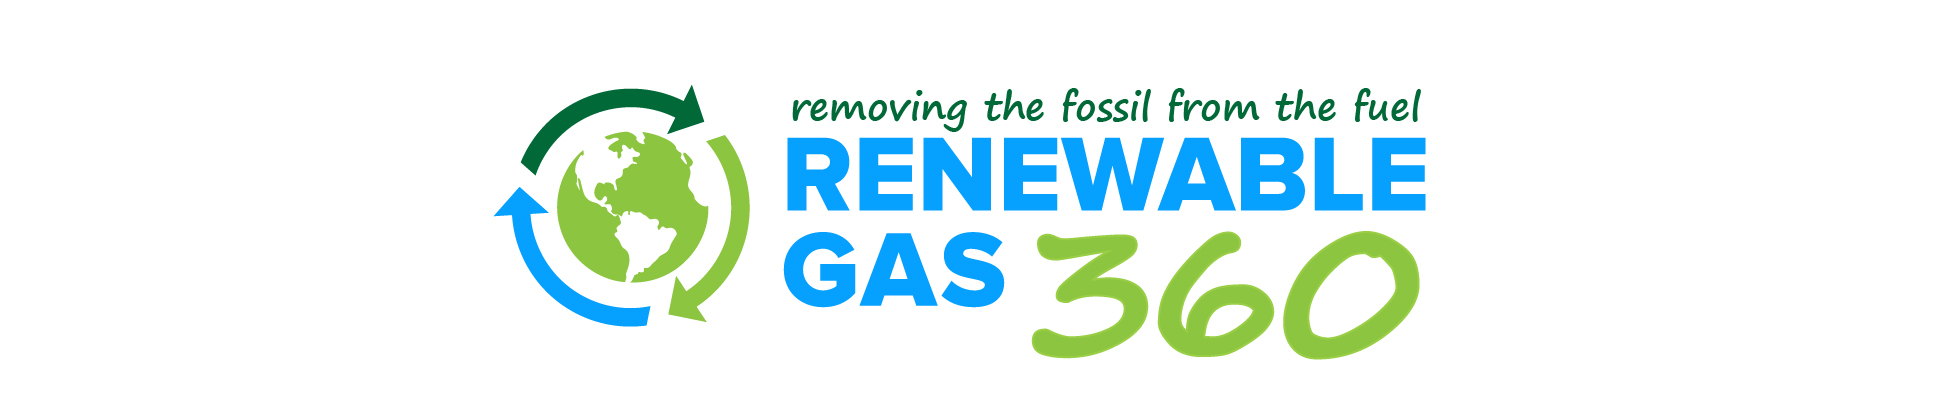 Renewable Gas 360, f